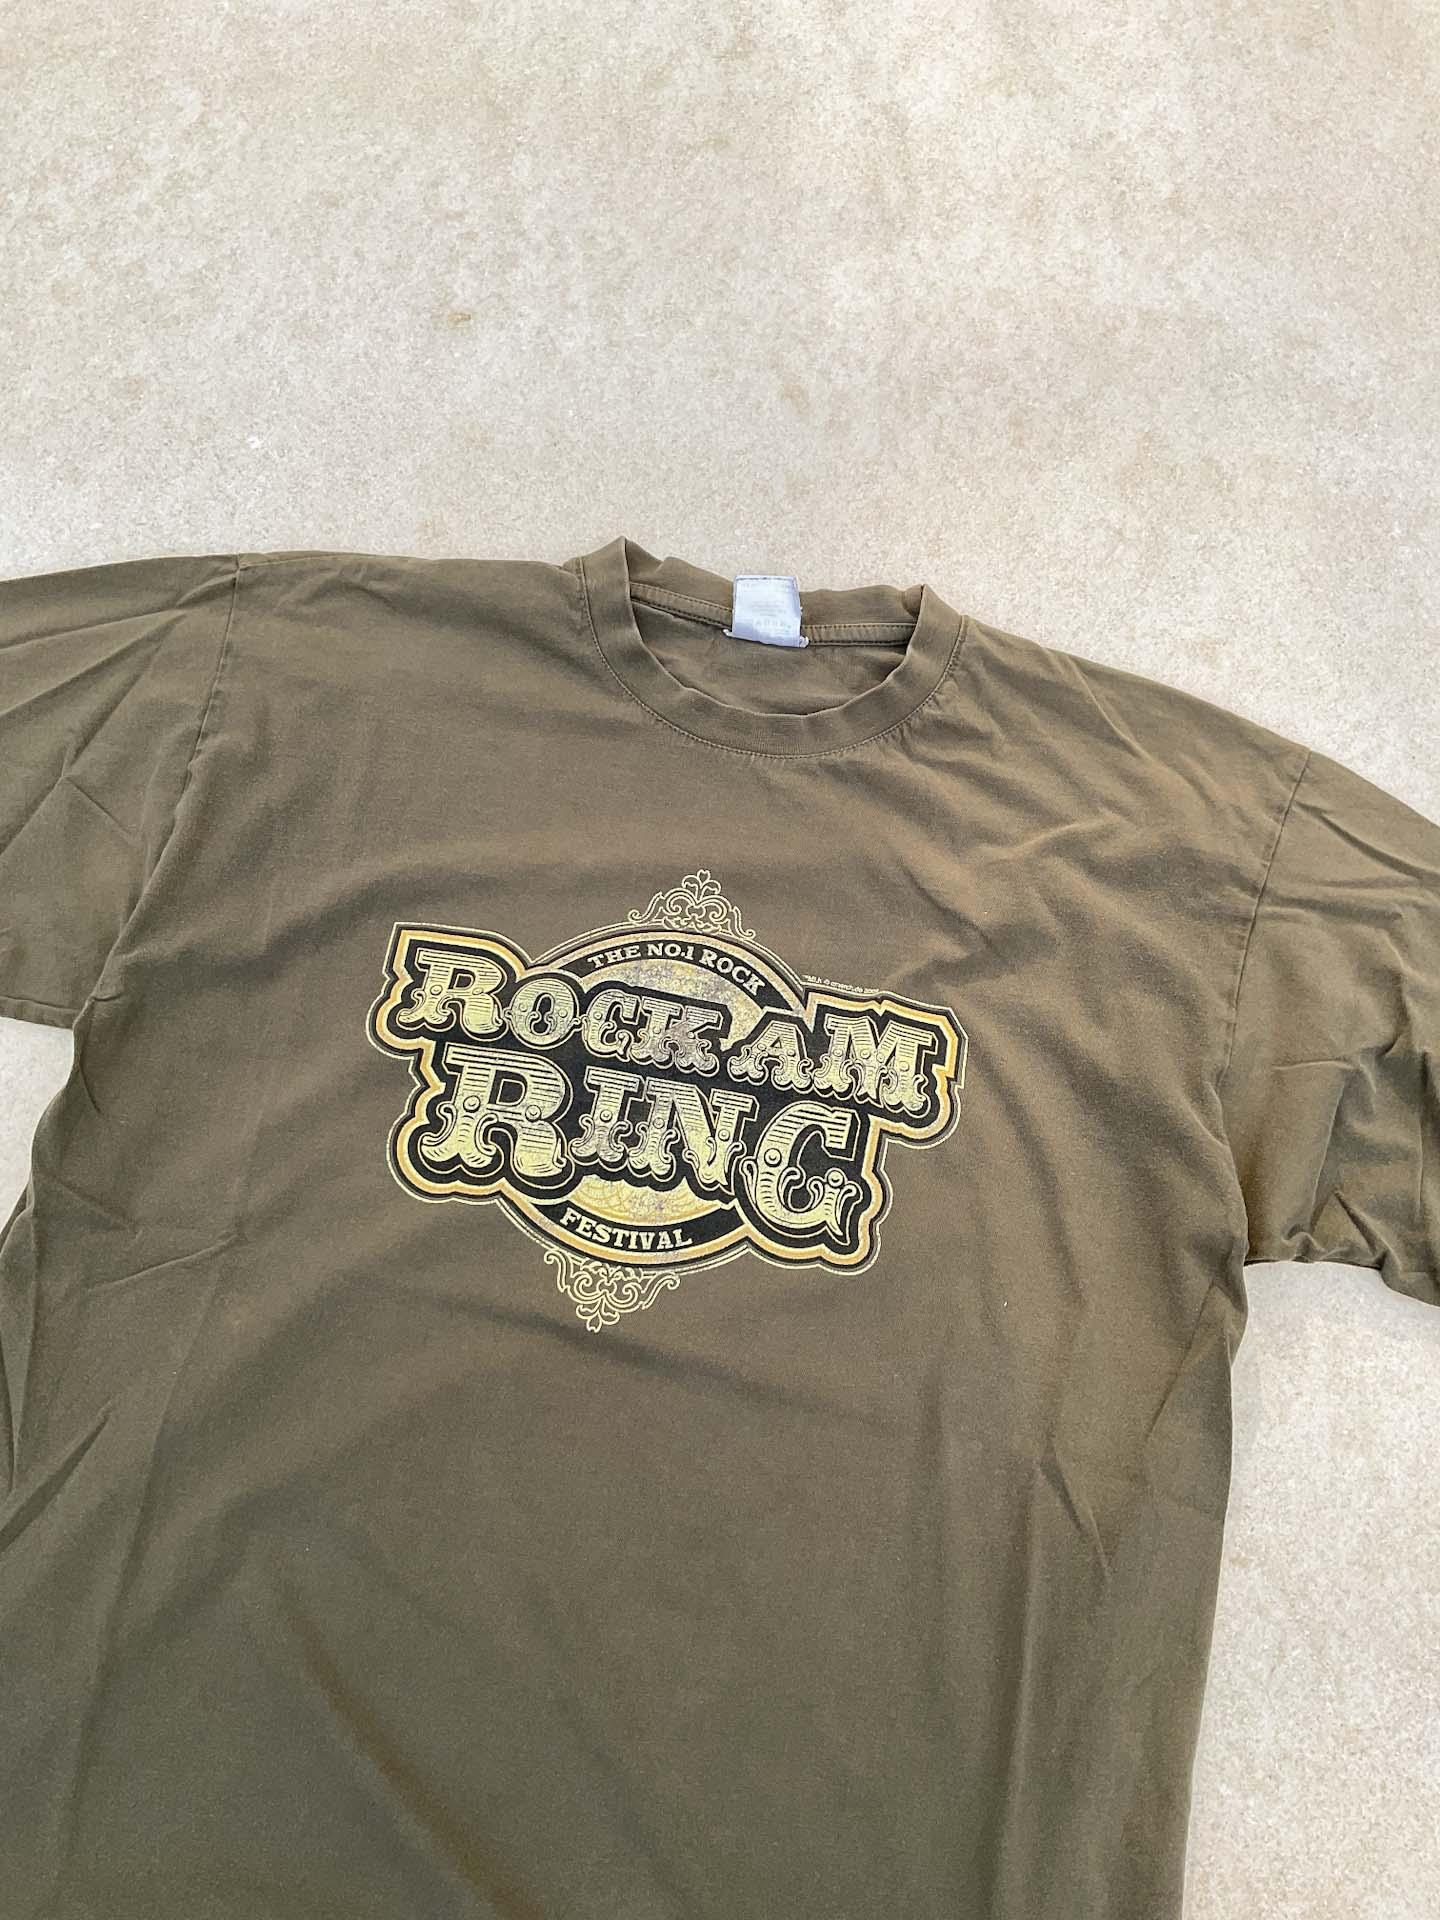 Rock am Ring shirt - secondvintage